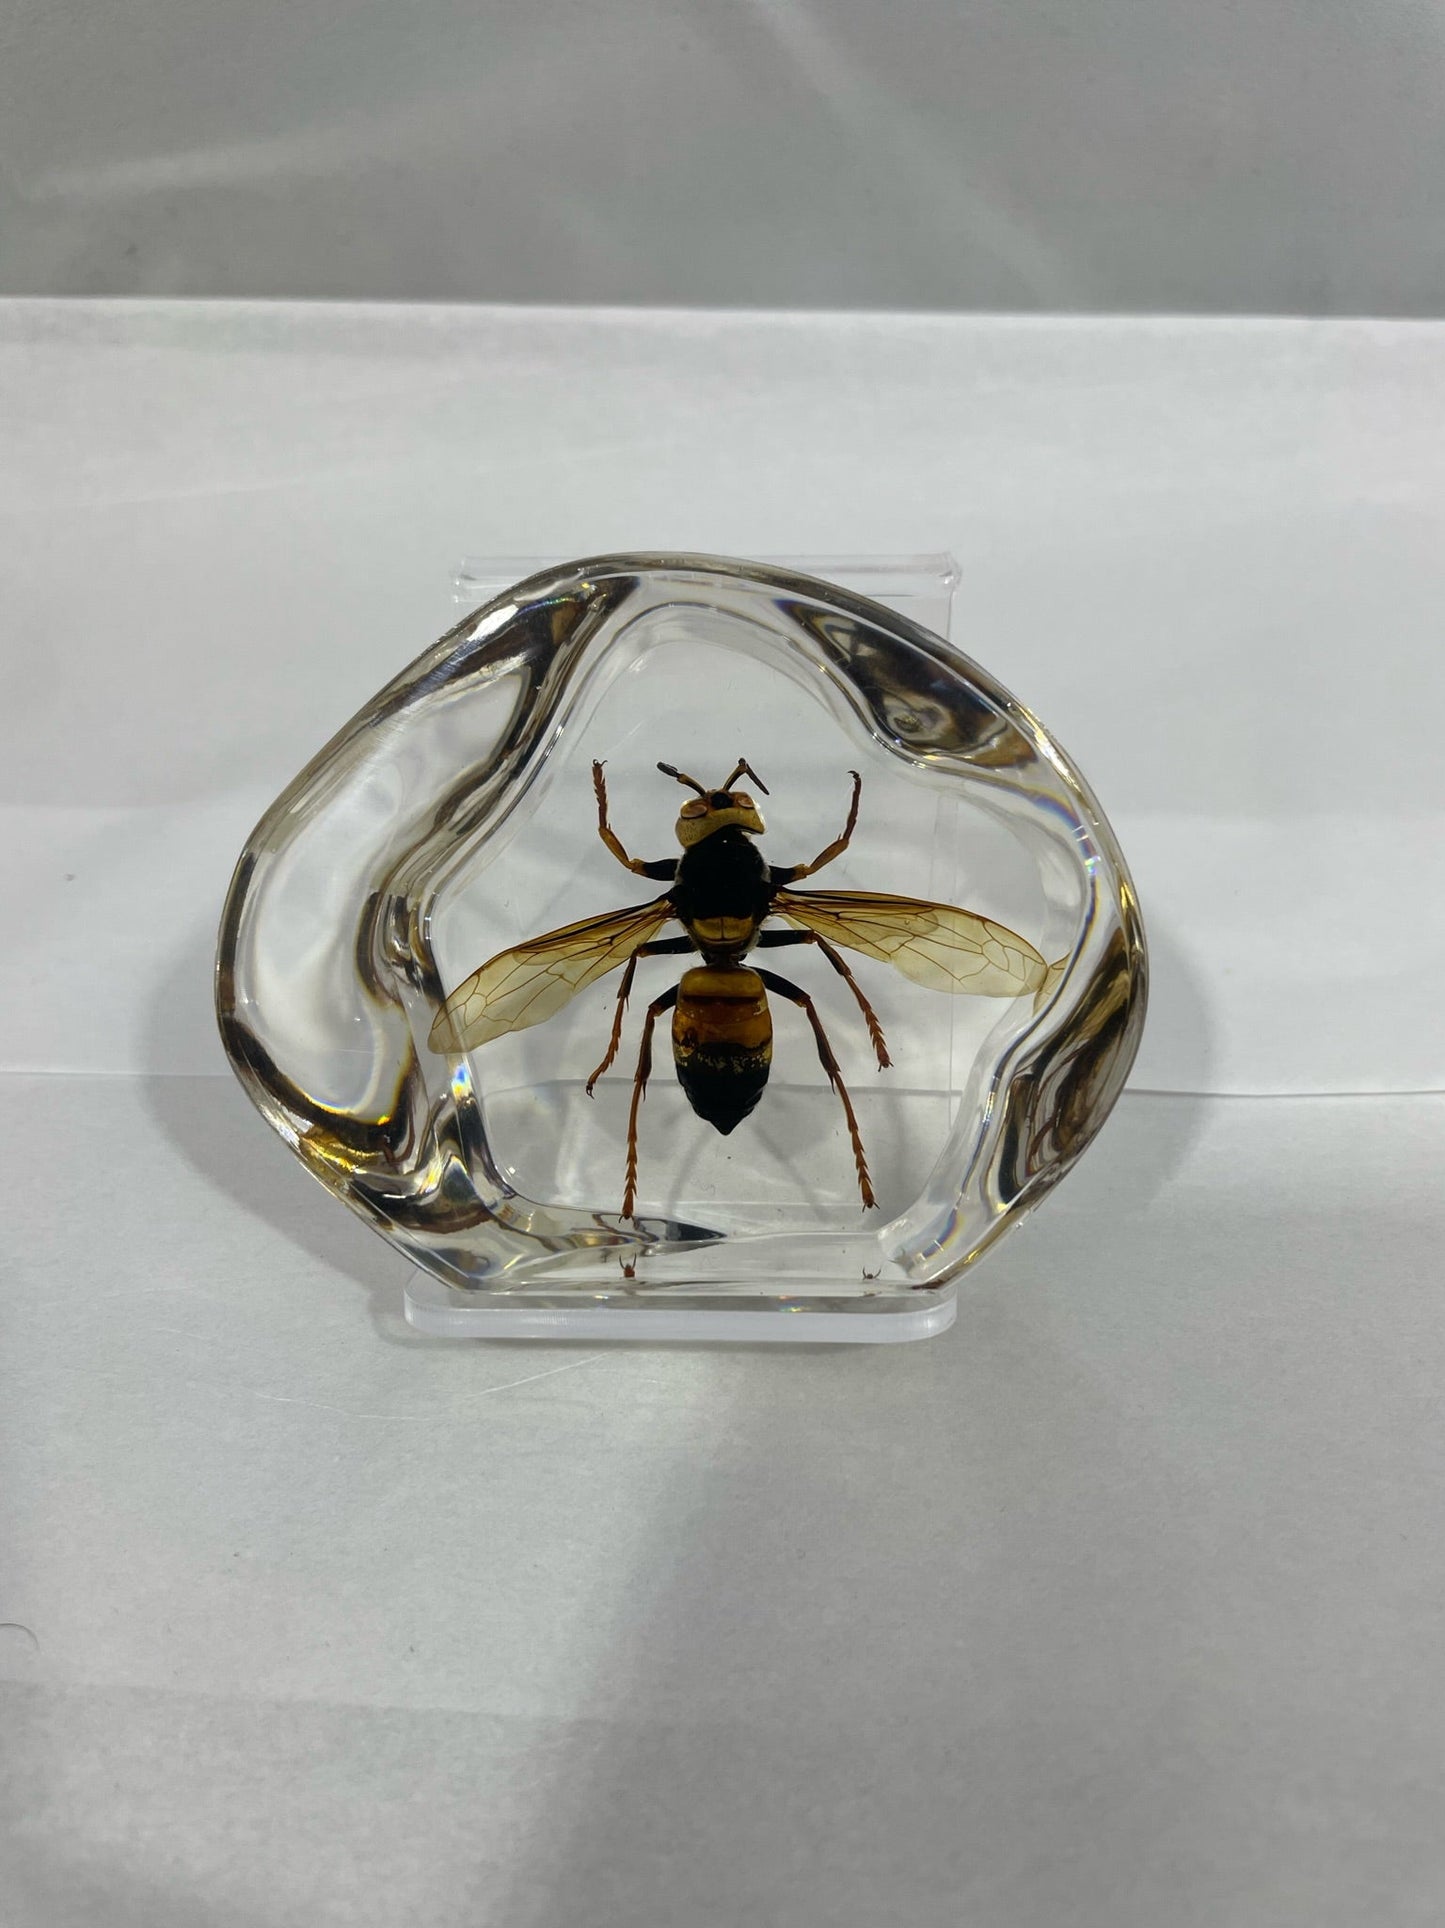 2.9" Organic Unique and Rare Resin encased Asian giant hornet (Vespa mandarinia) Decoration